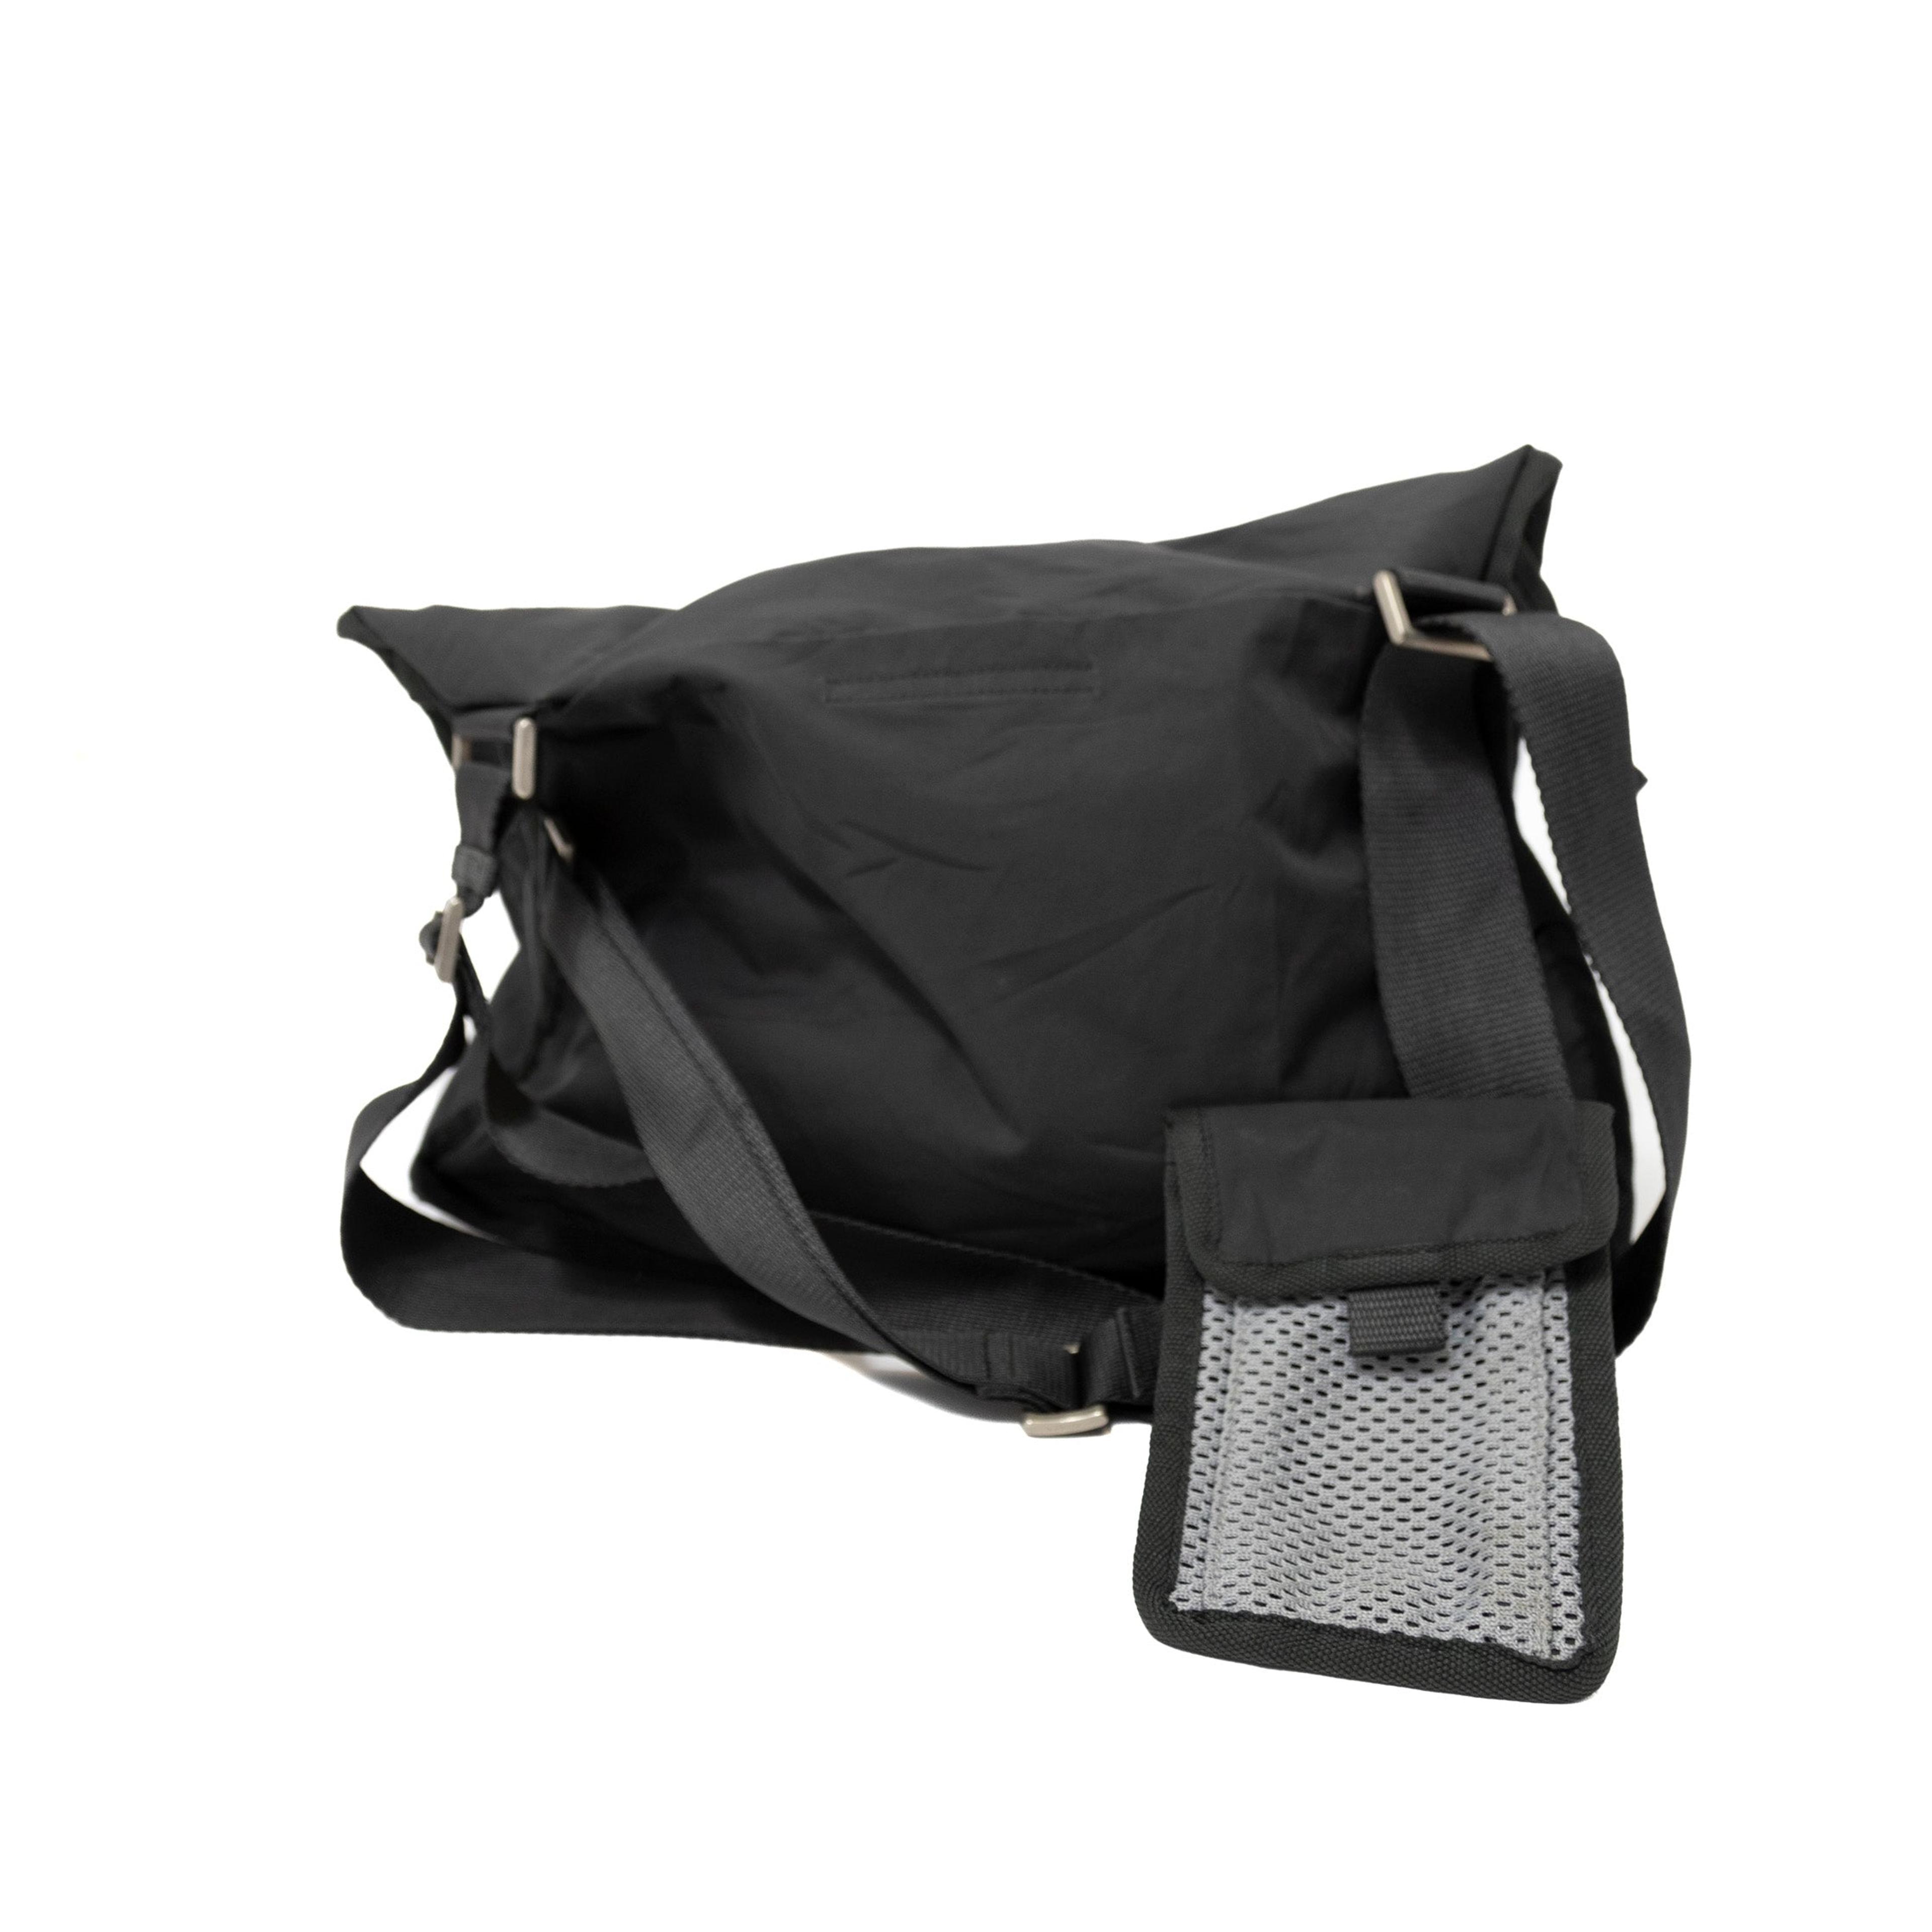 Alternate View 2 of Prada Sport Messenger Mesh Pocket Crossbody Bag